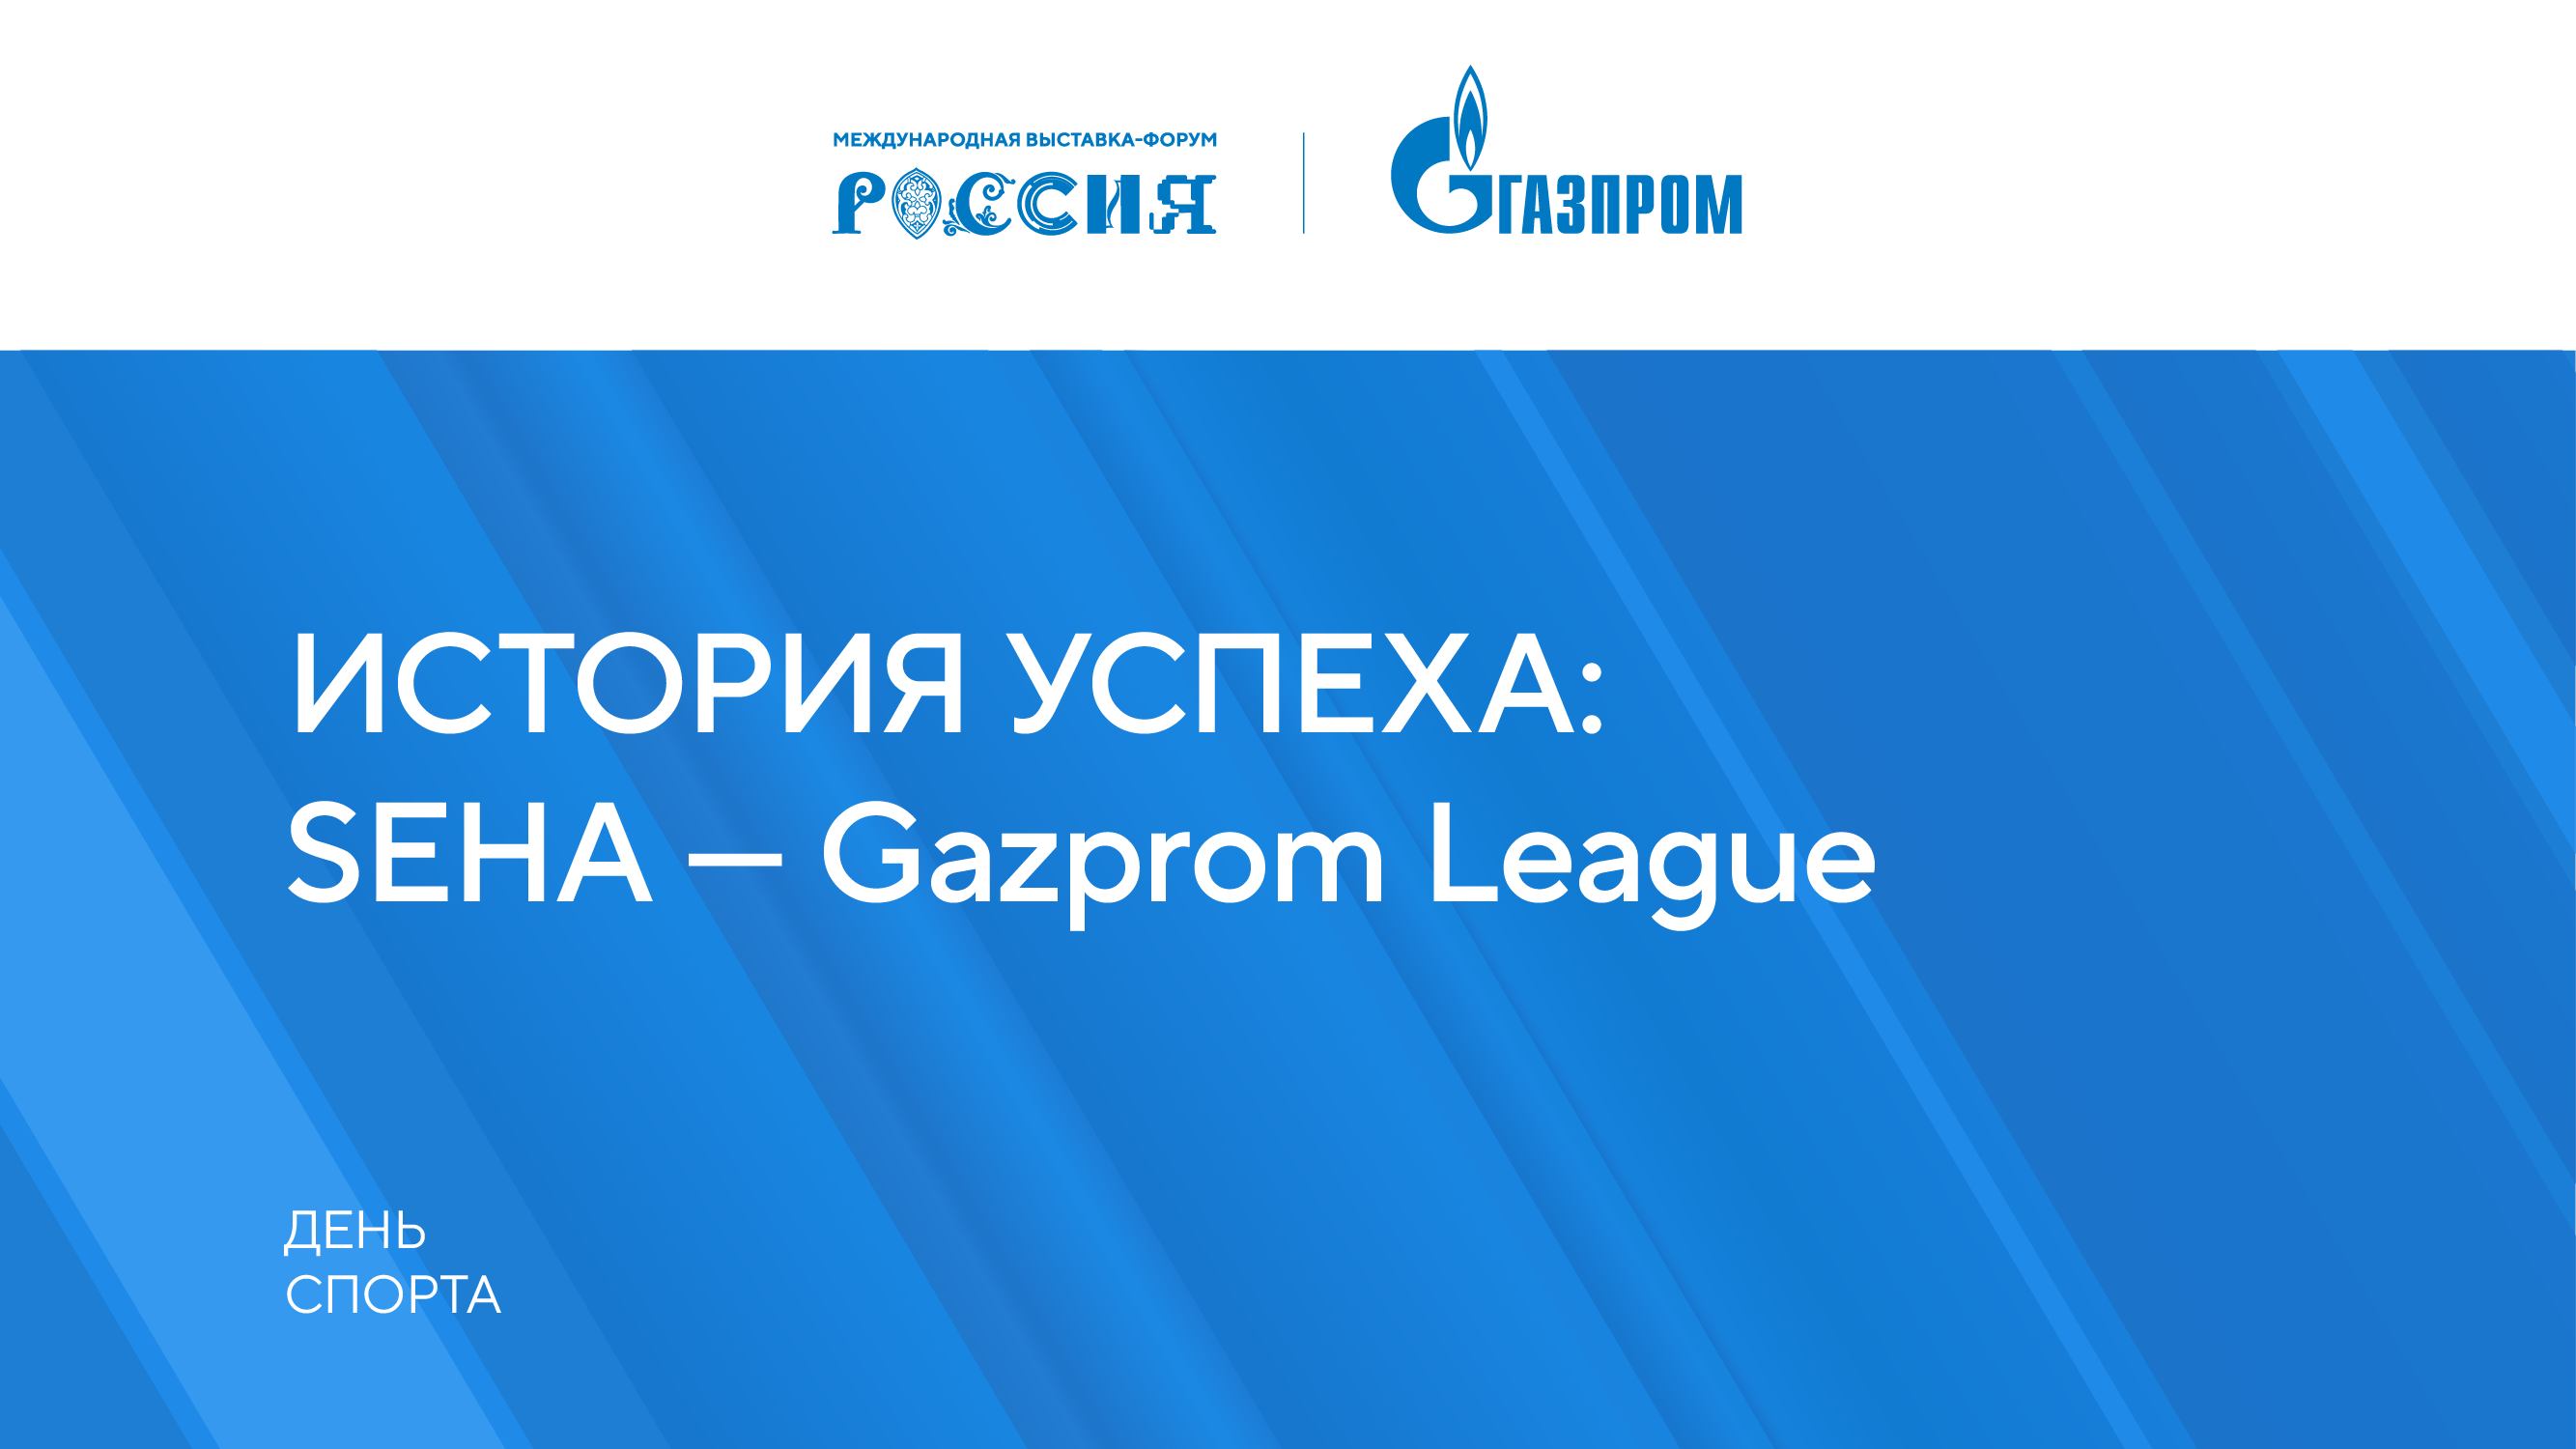 ИСТОРИЯ УСПЕХА: SEHA – Gazprom League